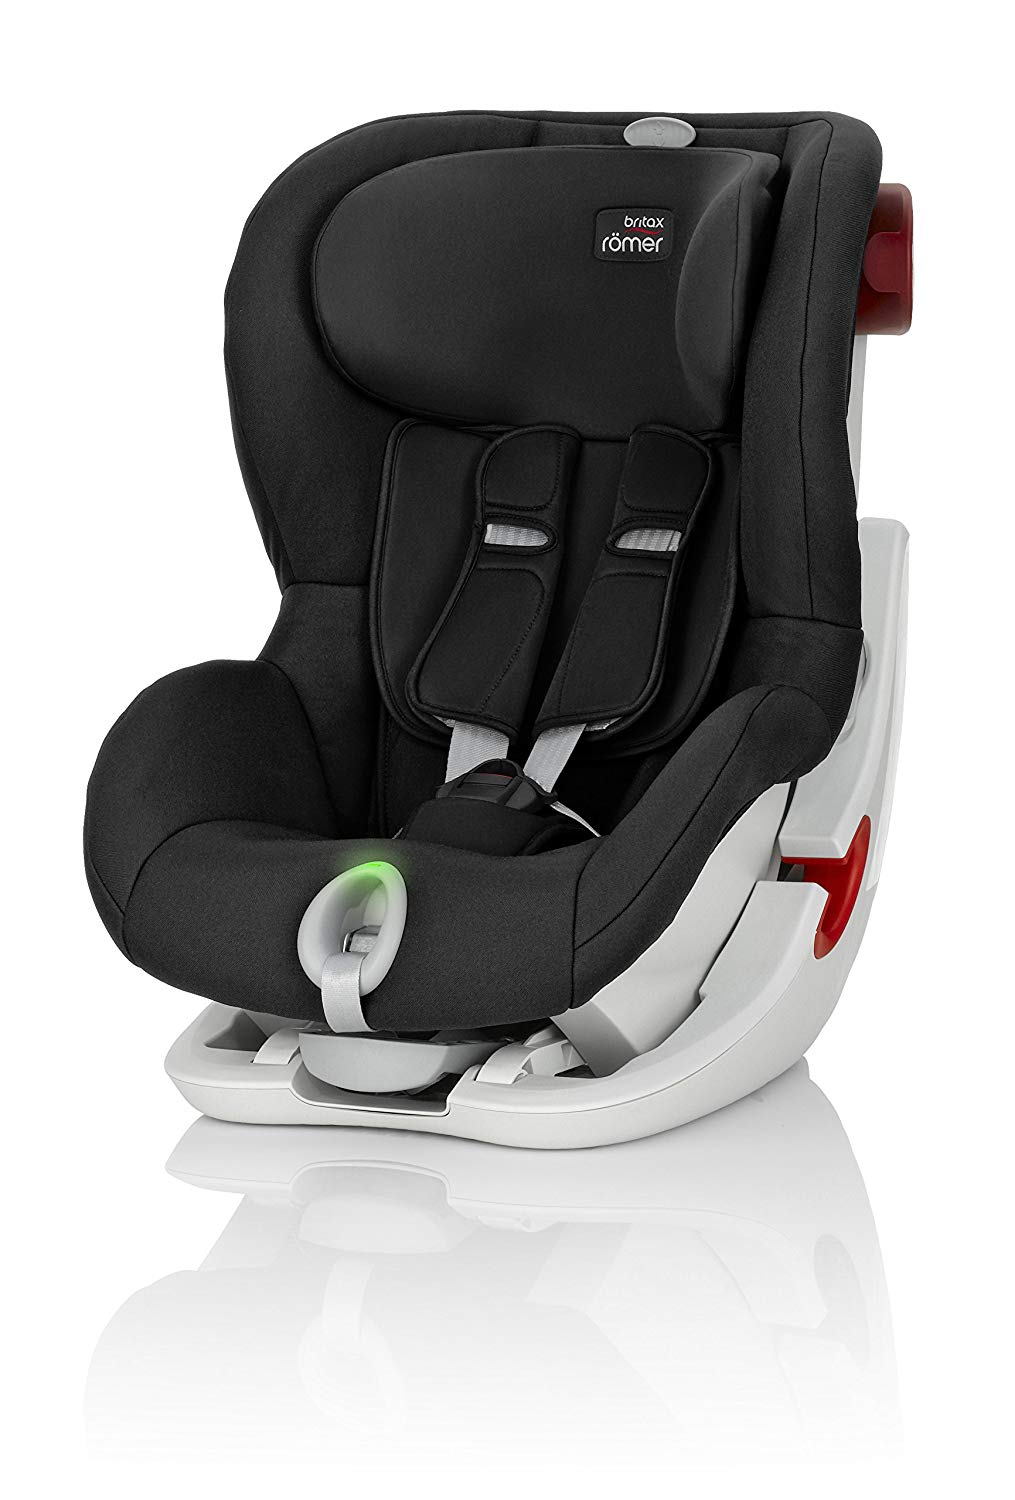 Britax Römer King II Child Car Seat, Group 1/1: 9 - 18 kg